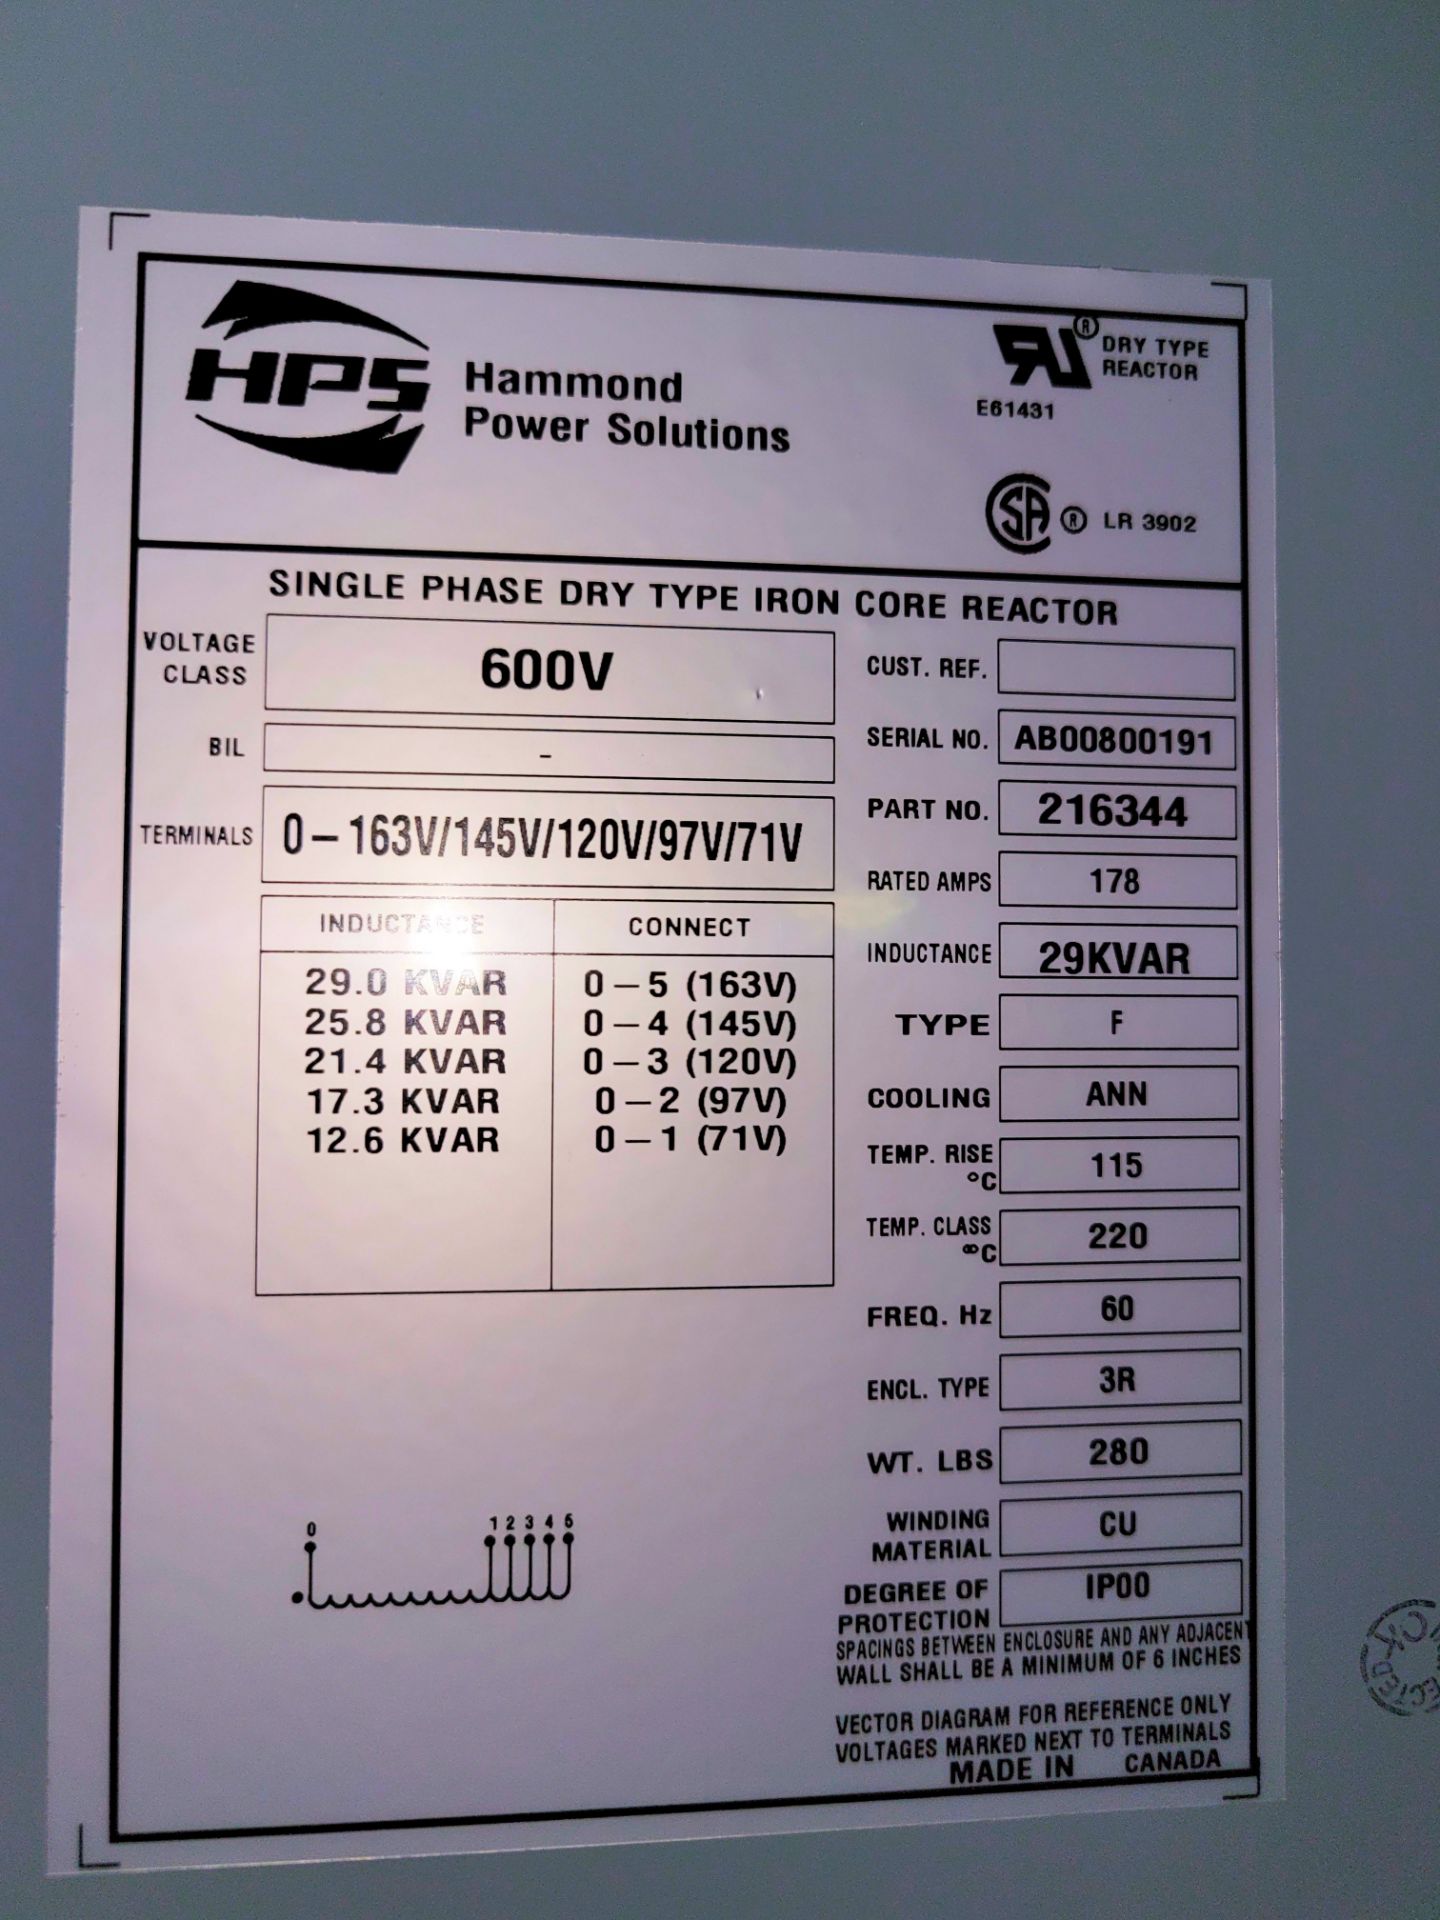 HPS No. 216344 600-V, 178-Amp Single Phase Dry Type Iron Core Reactor, S/n AB00800191, 3R Enclosure, - Image 2 of 2